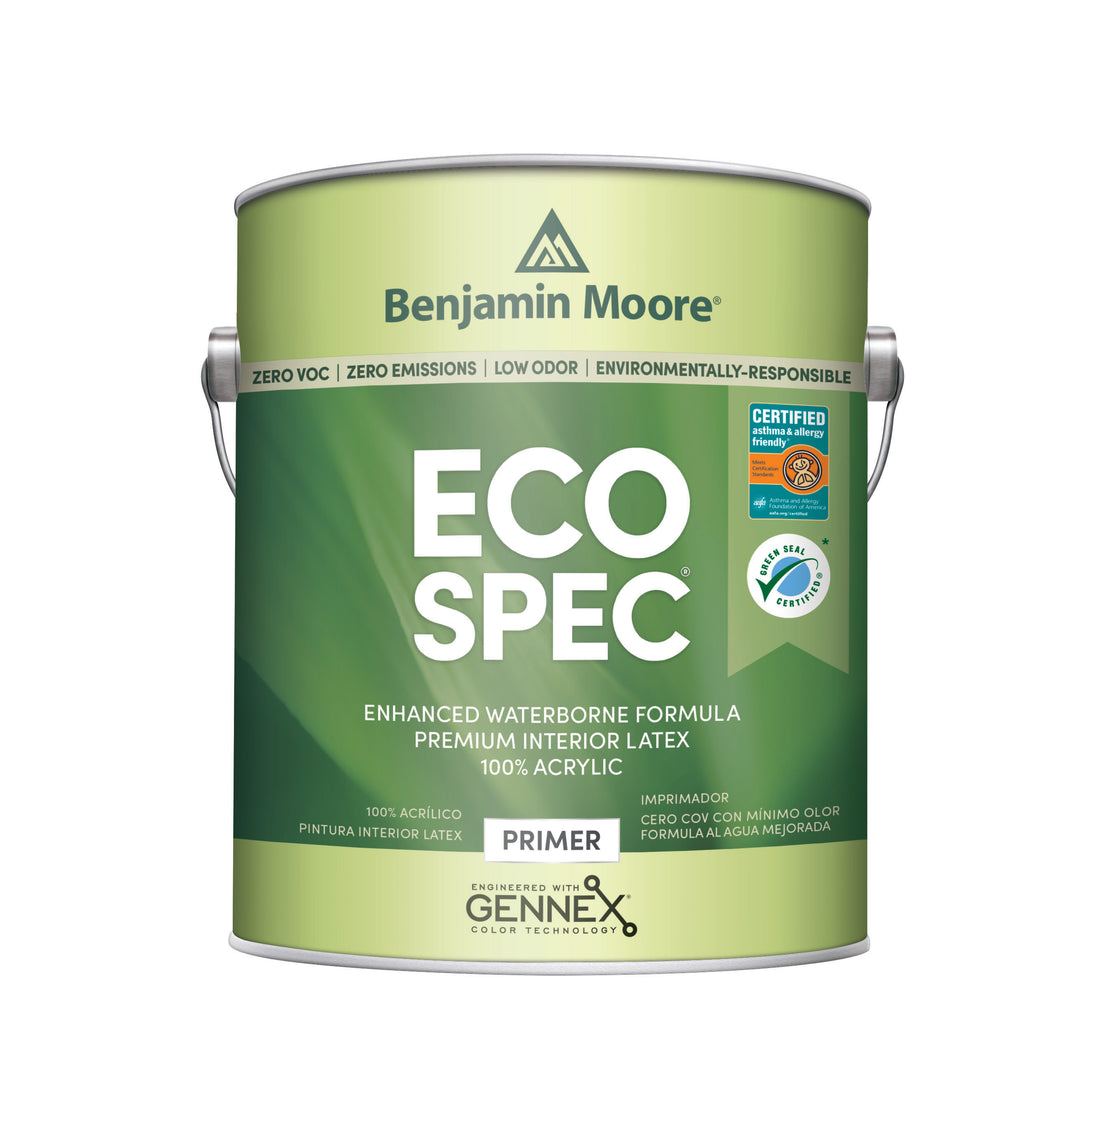 Eco Spec® WB Interior Latex Paint - Flat N373